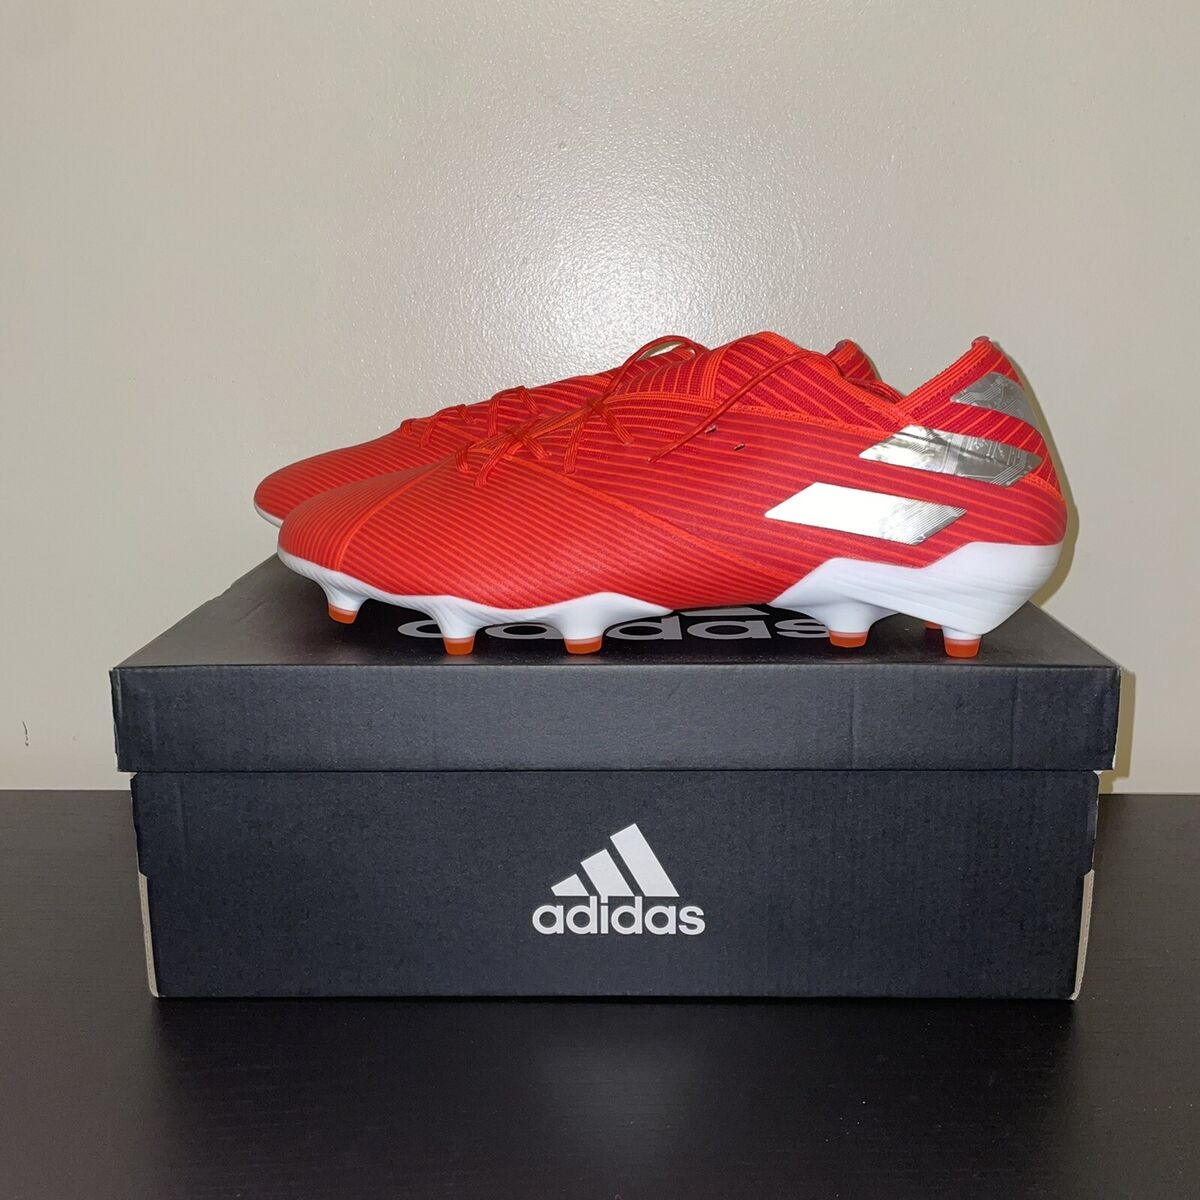 Adidas Nemeziz 19.1 FG Red White Football Boots Soccer F34408 Size 9.5-12 |